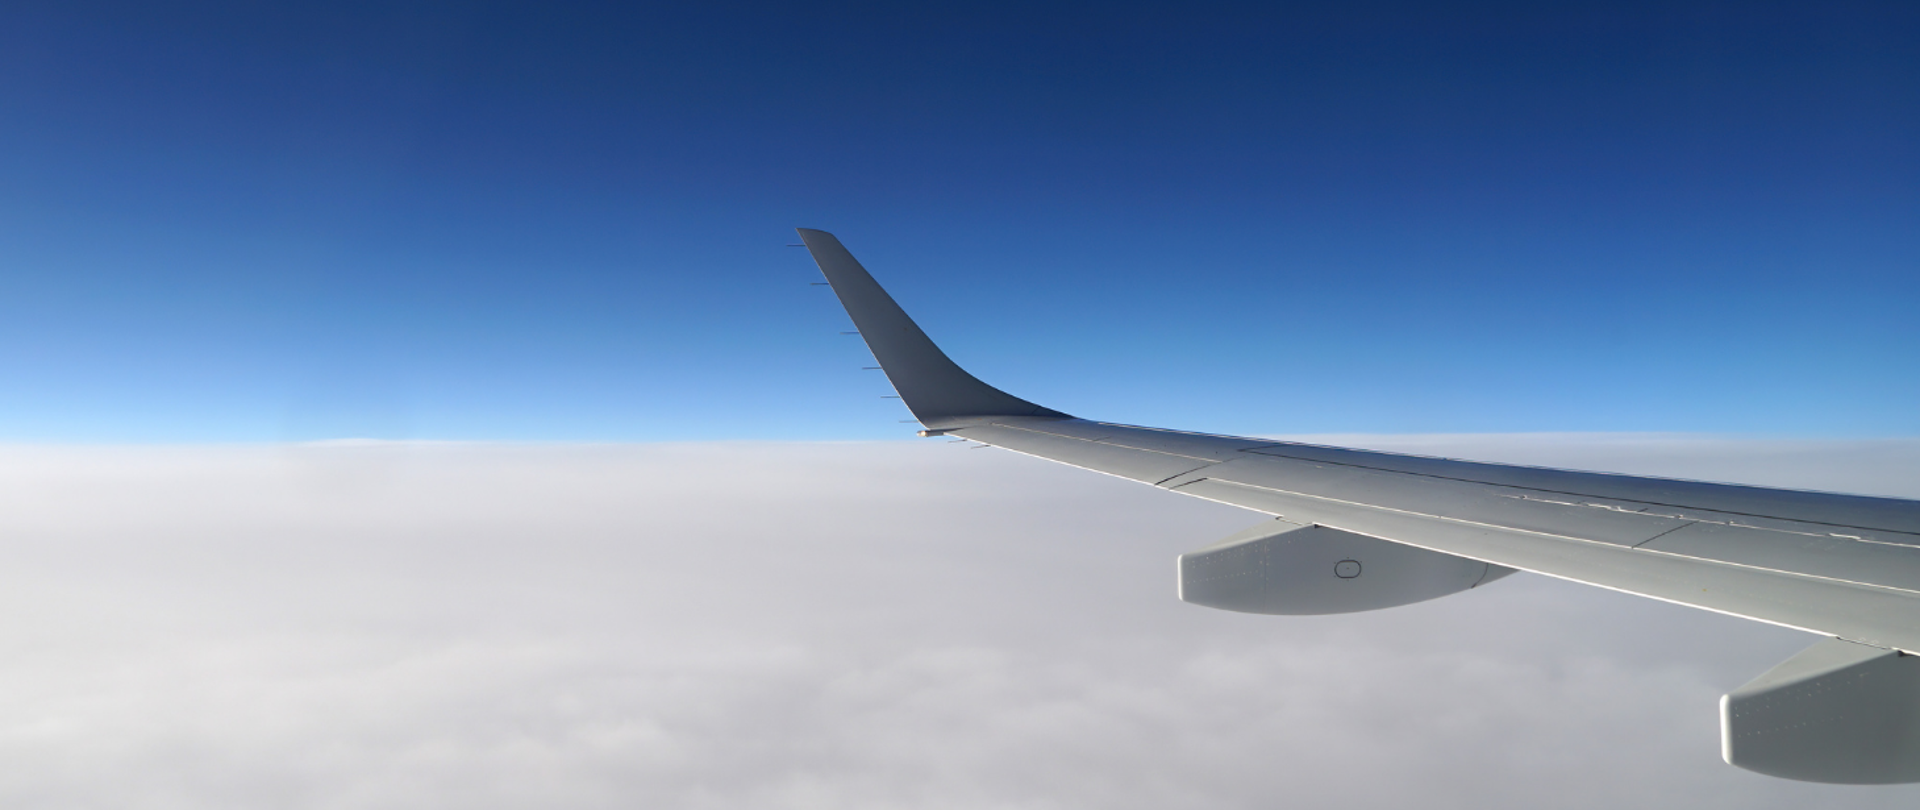 Skrzydło lecącego samolotu na tle chmur i błękitnego nieba